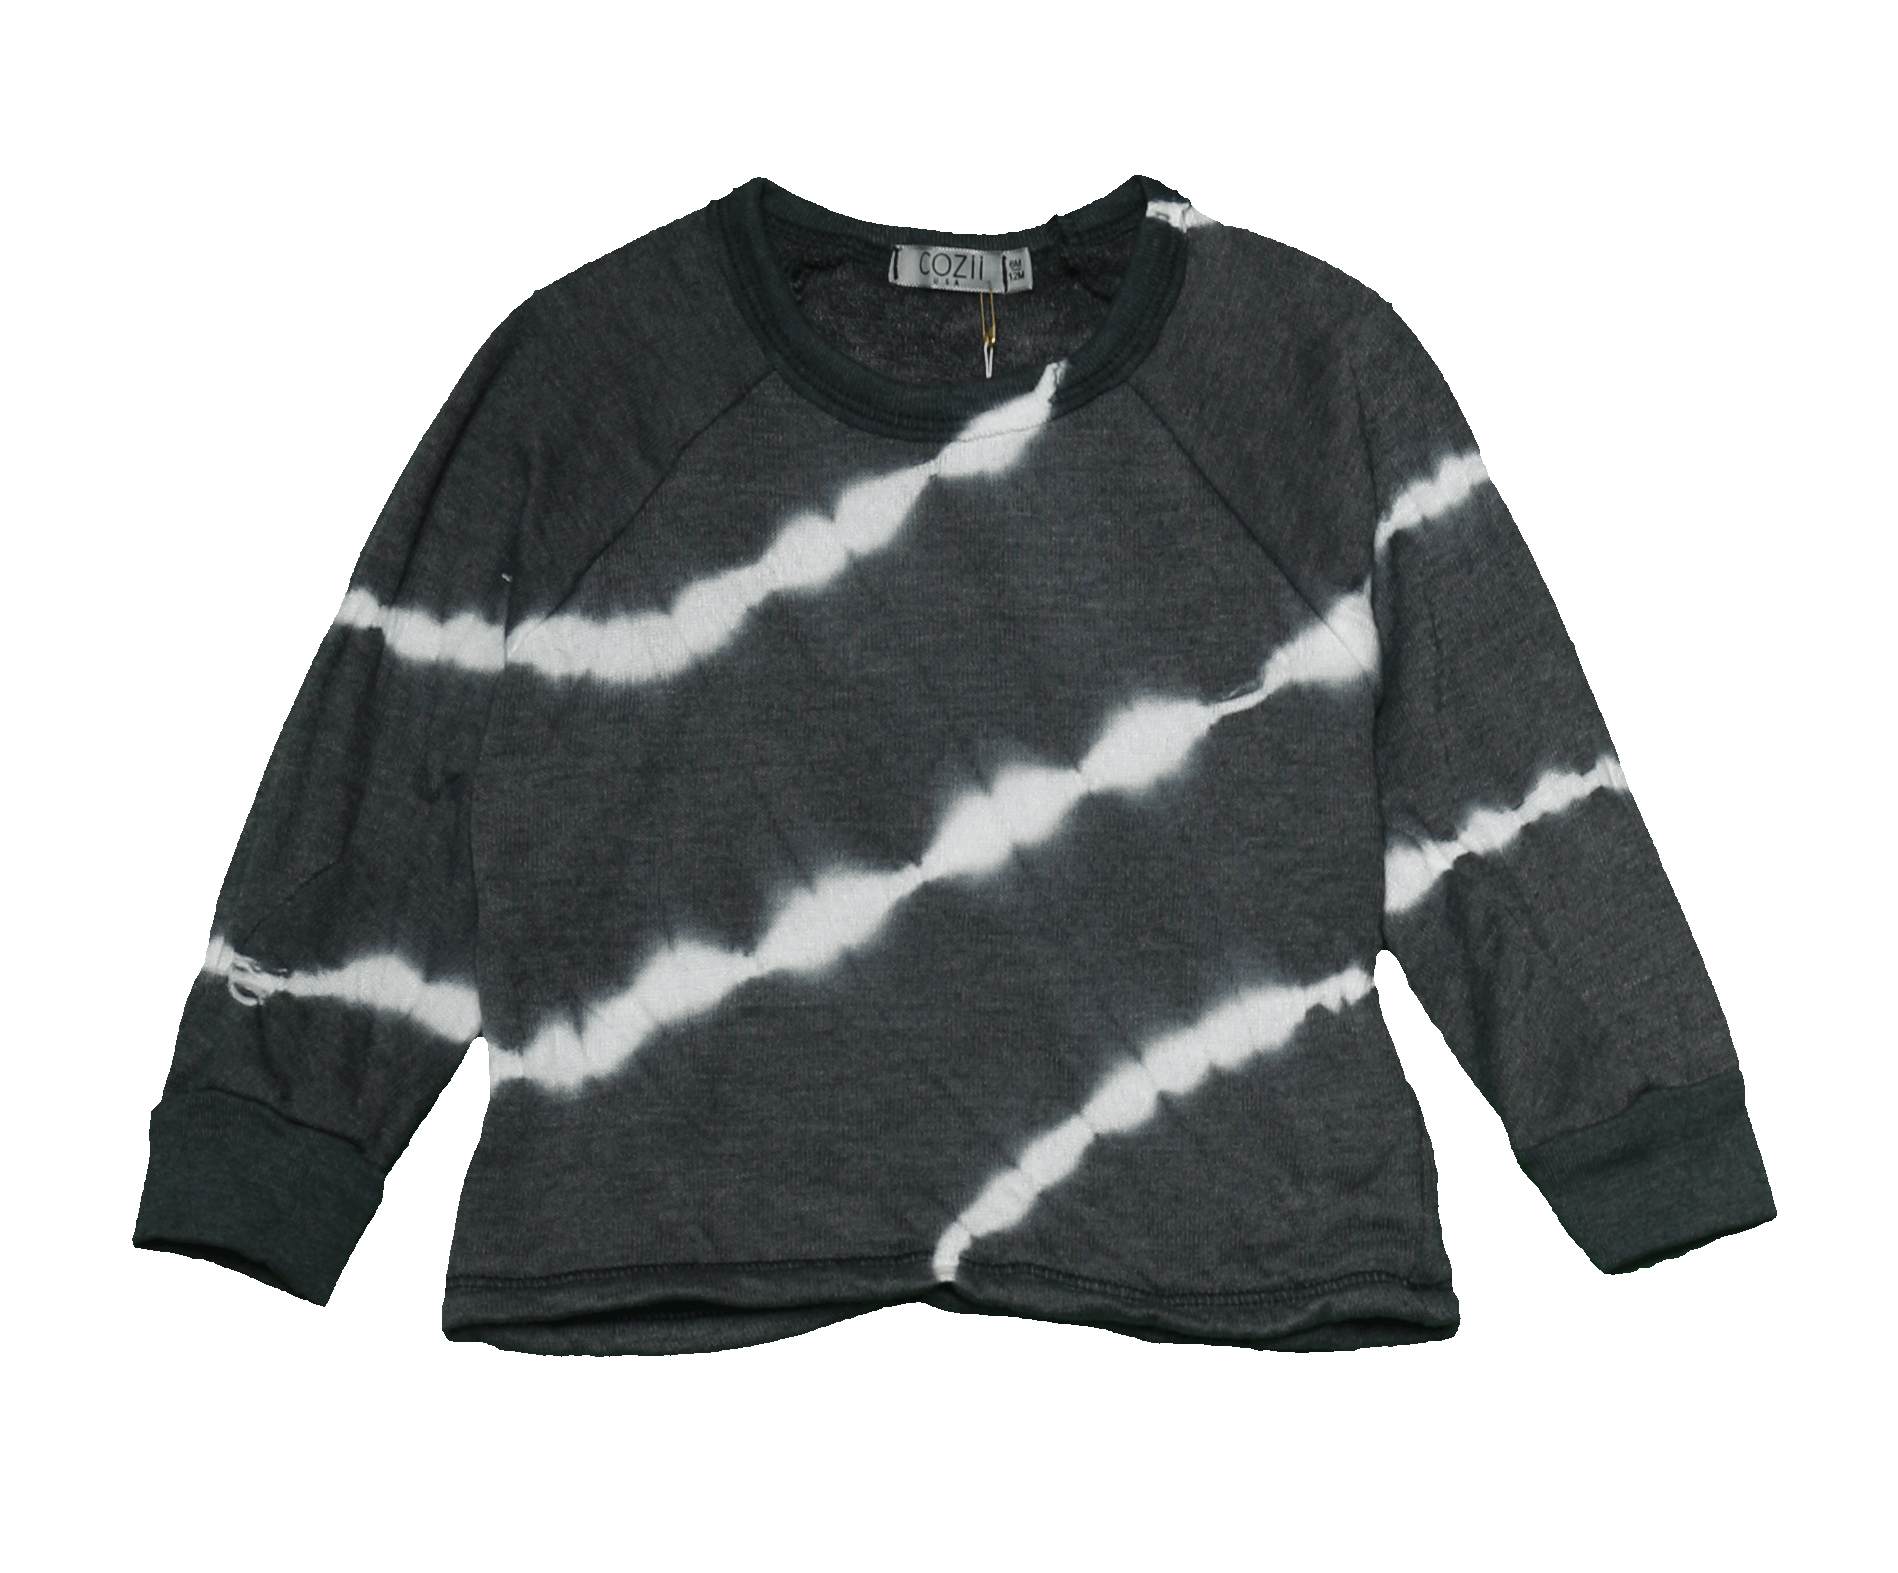 savoy CC Pigment Long Sleeve Sweatshirt - トップス